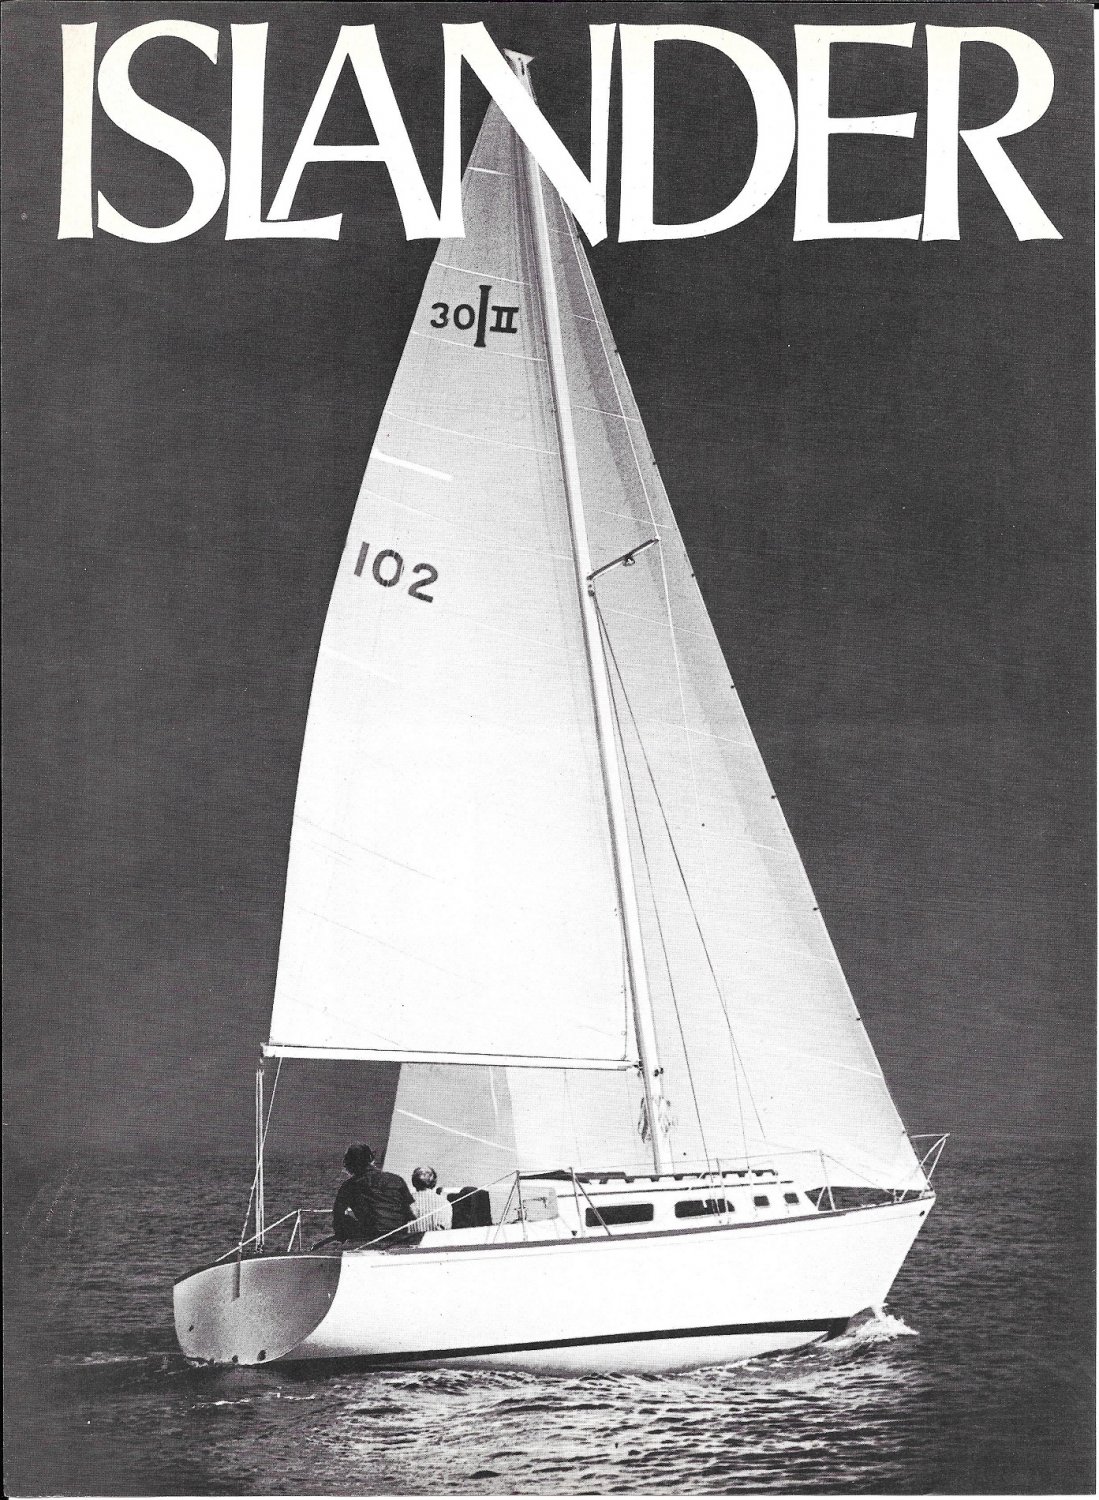 islander 30 sailboat